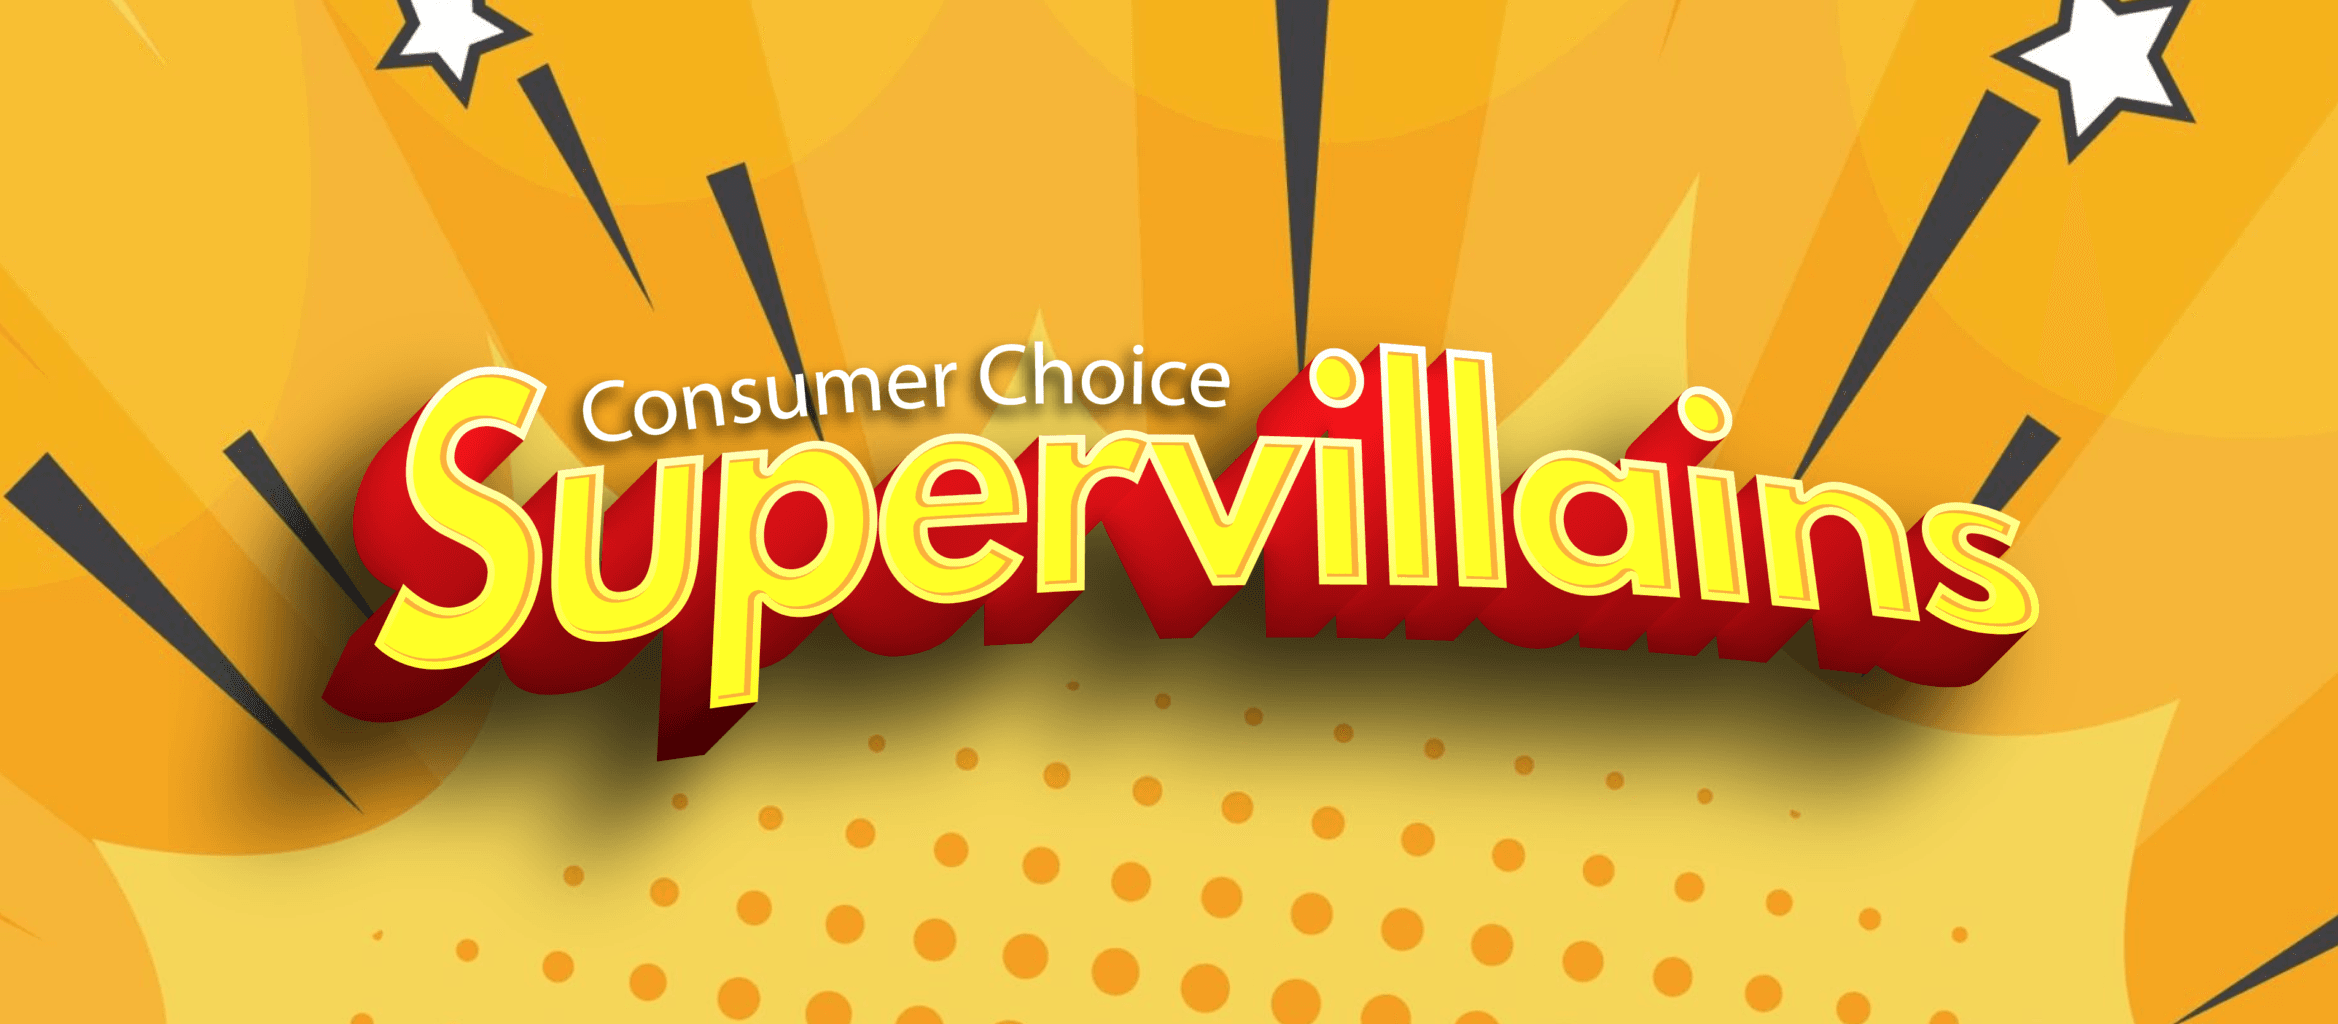 Consumer Supervillains